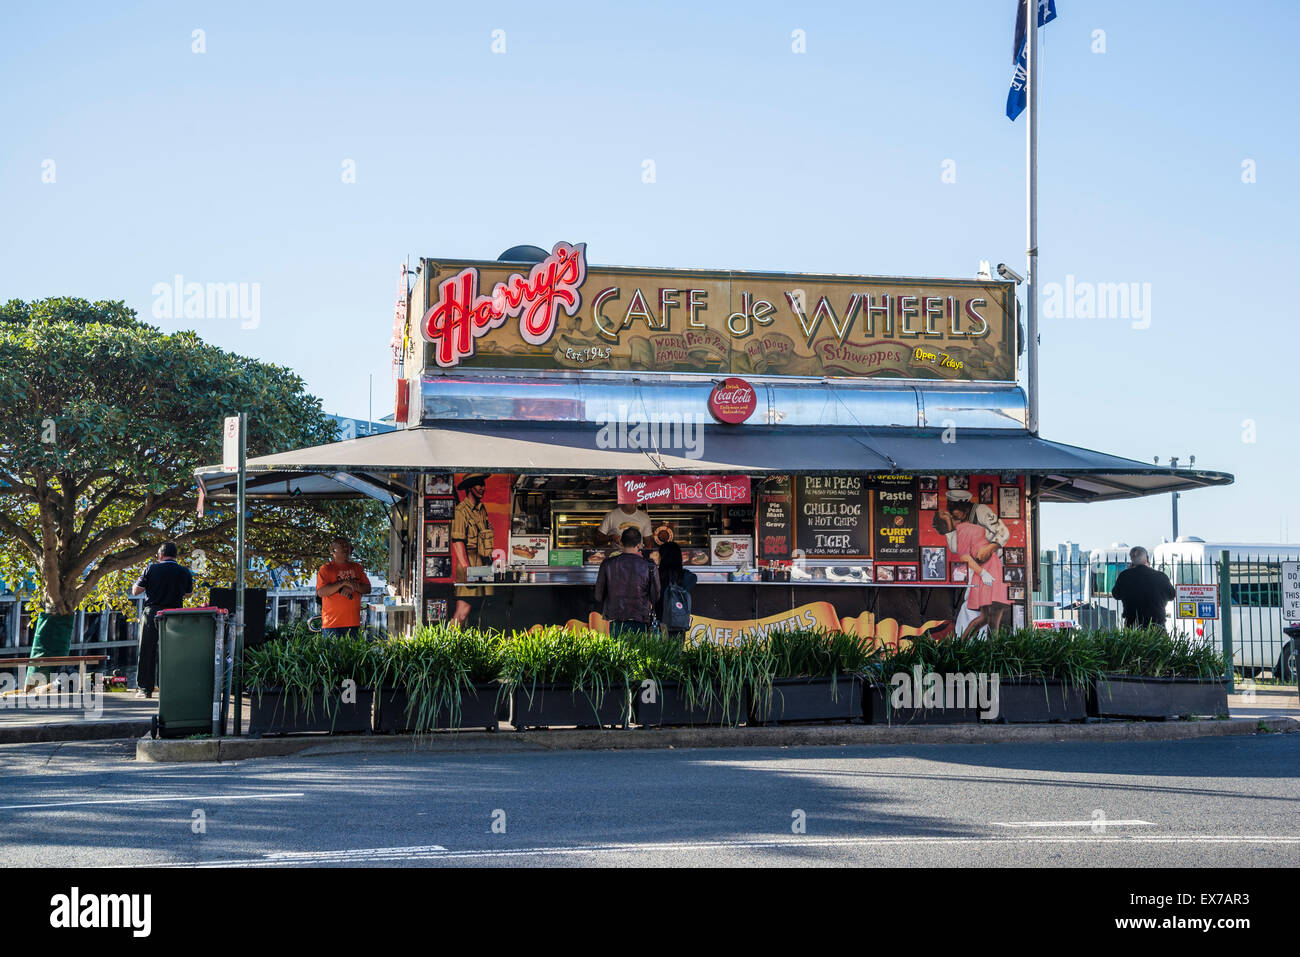 Harry's Cafe de Wheels, Woolloomooloo, Sydney, Australia Stock Photo - Alamy